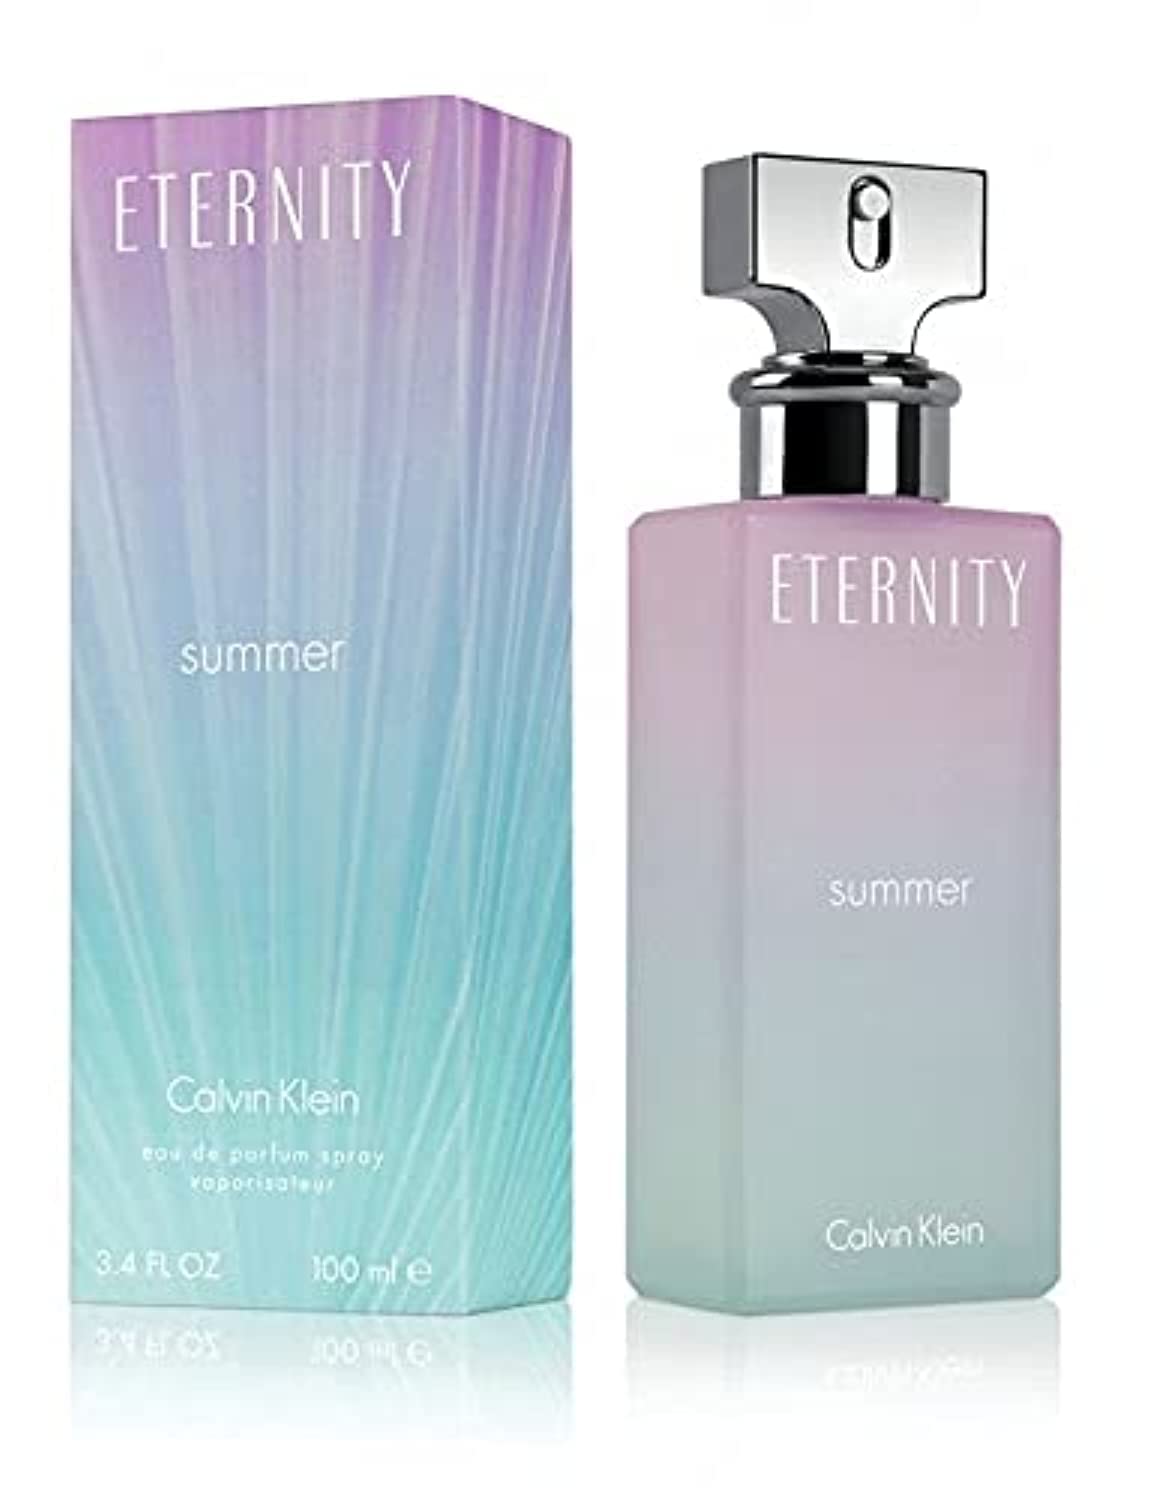 Eternity Summer 2016 by Calvin Klein for Women Eau de Parfum 100 ml